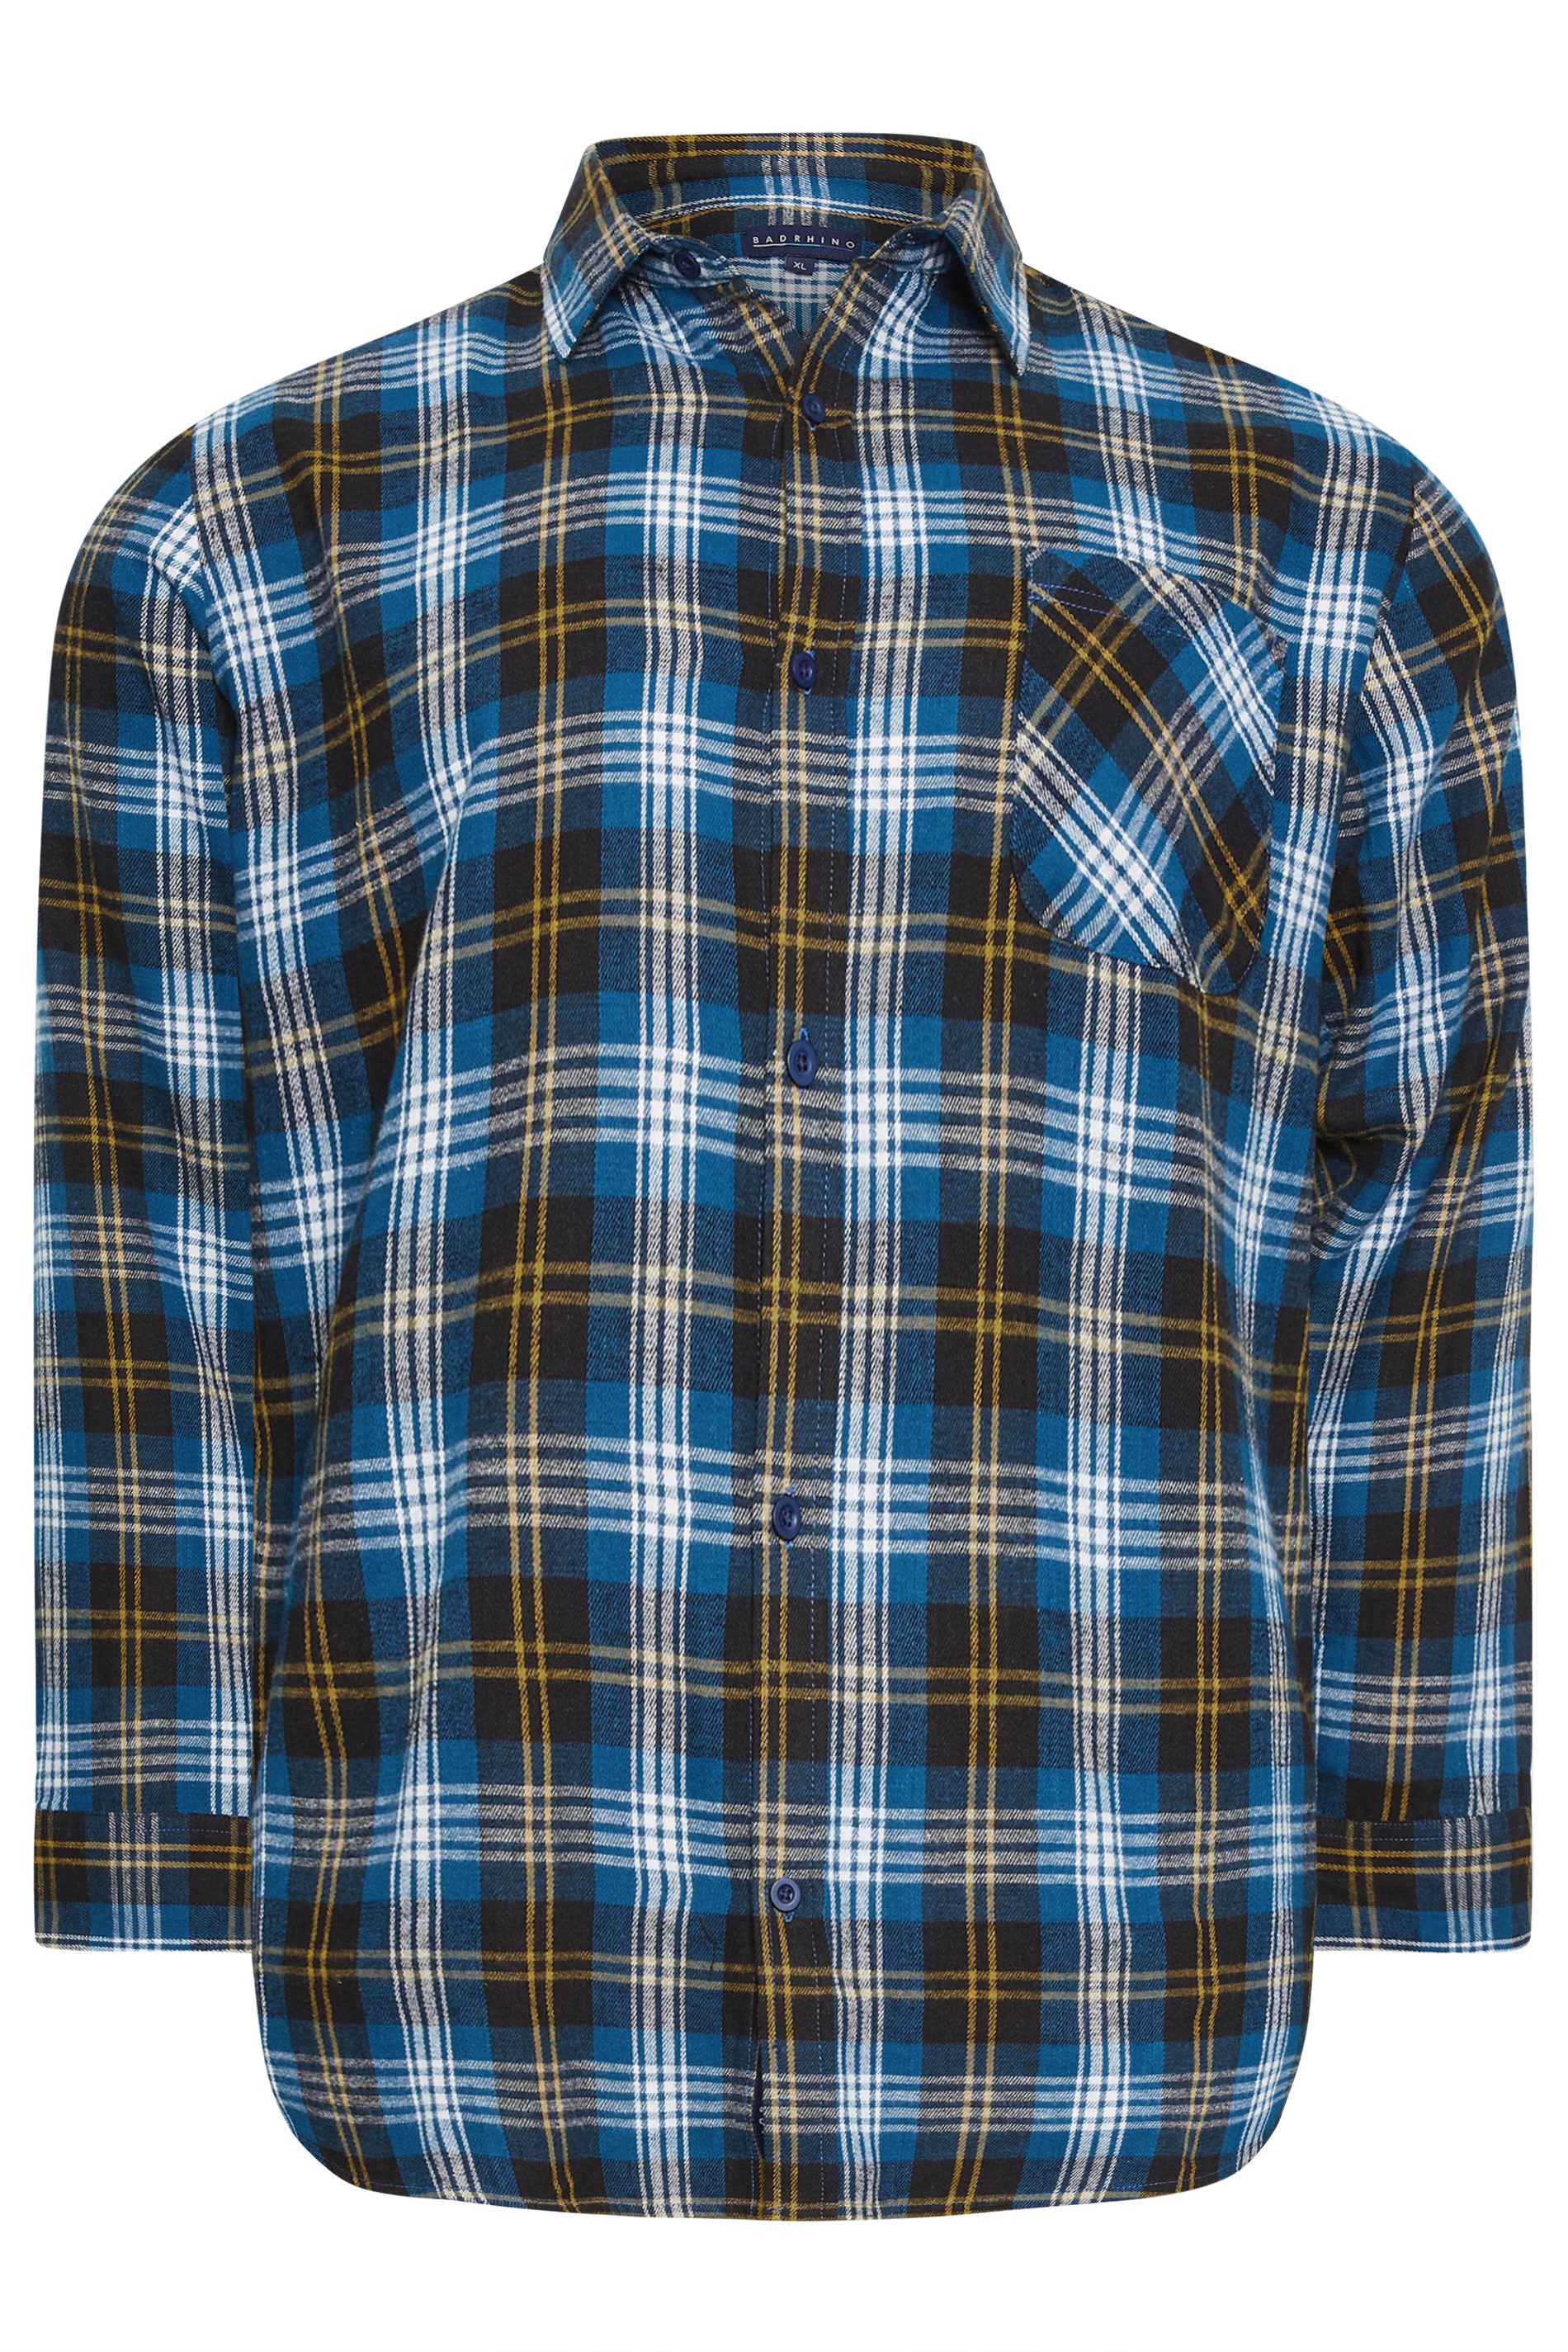 BadRhino Big & Tall Blue & Orange Brushed Check Long Sleeve Shirt | BadRhino 3